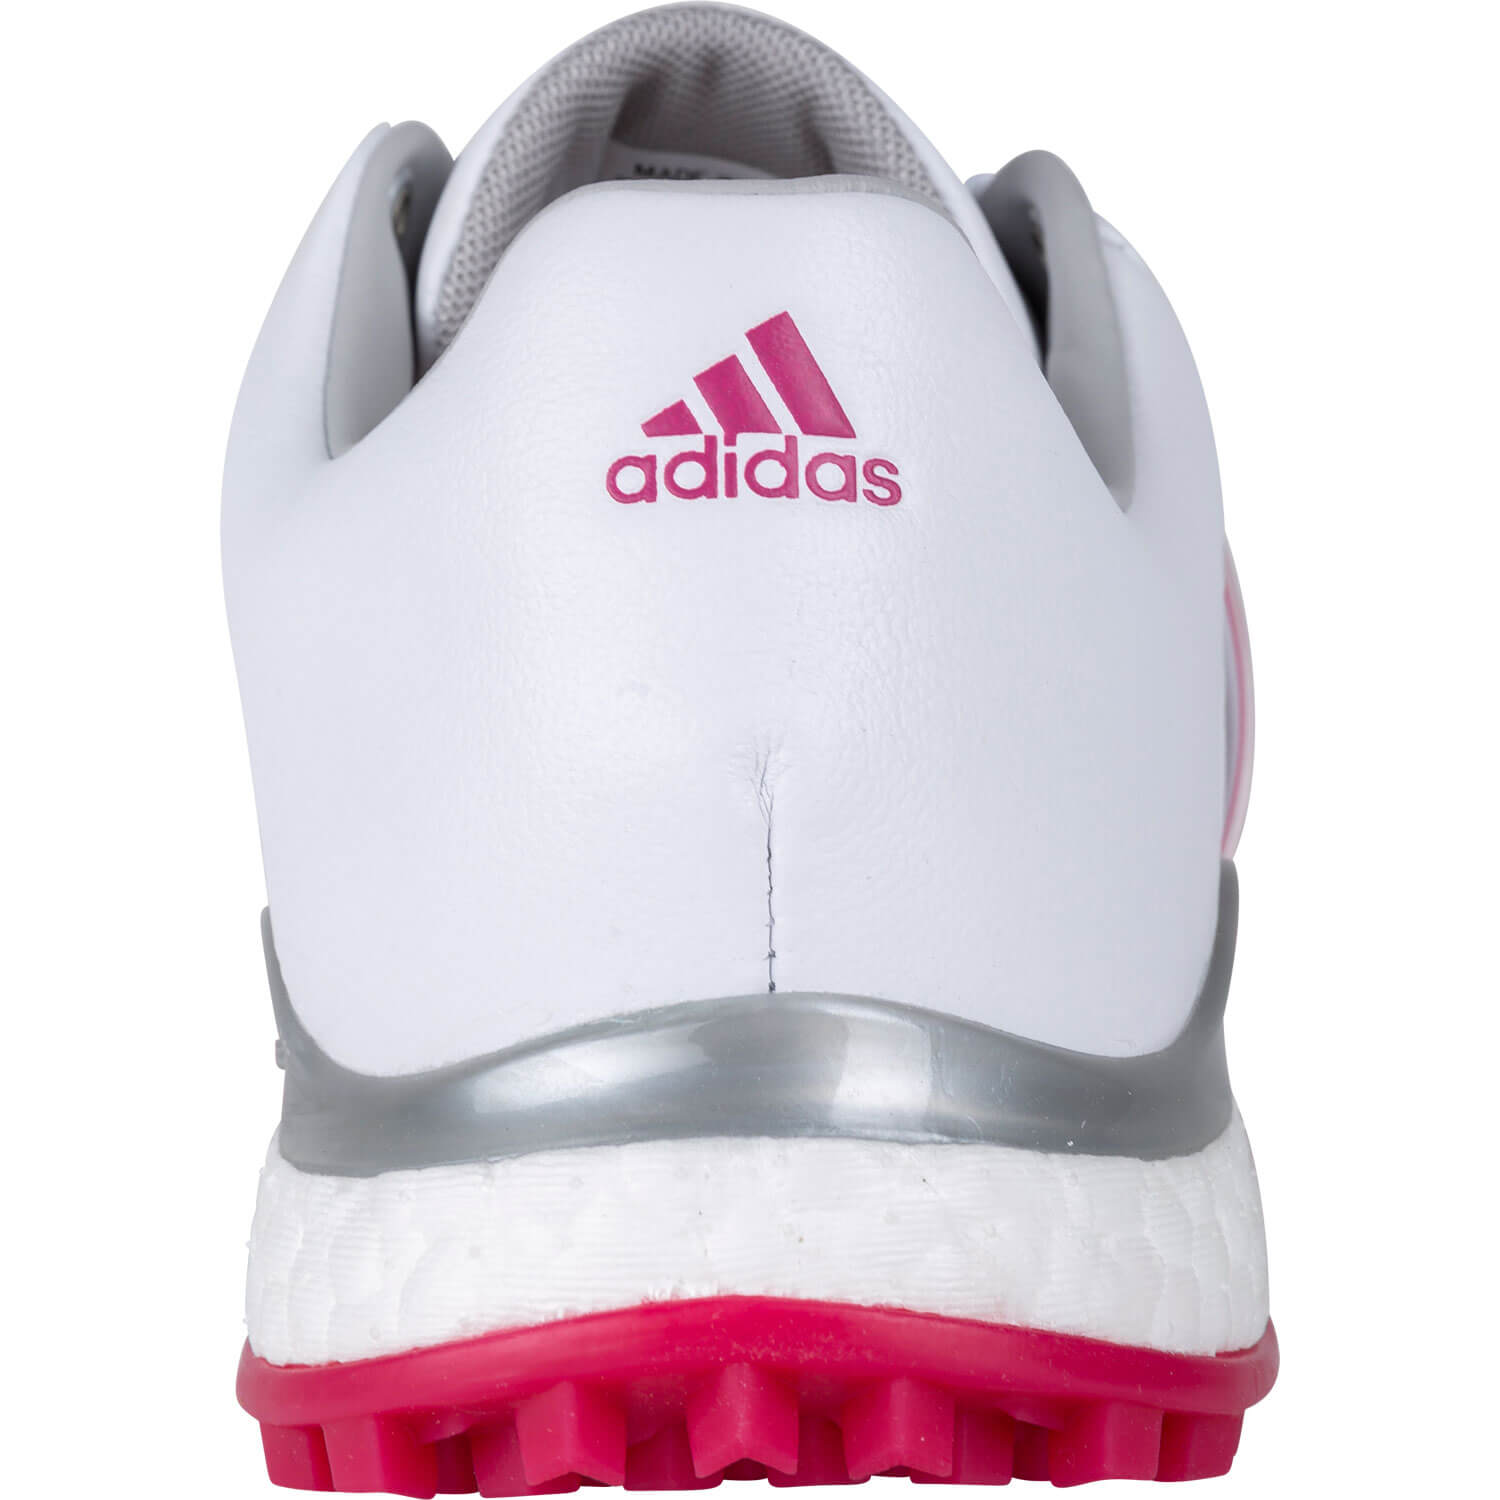 Adidas Tour360 XT-SL White/Red Damen White/Red 41 1/3 Normal 1000094737